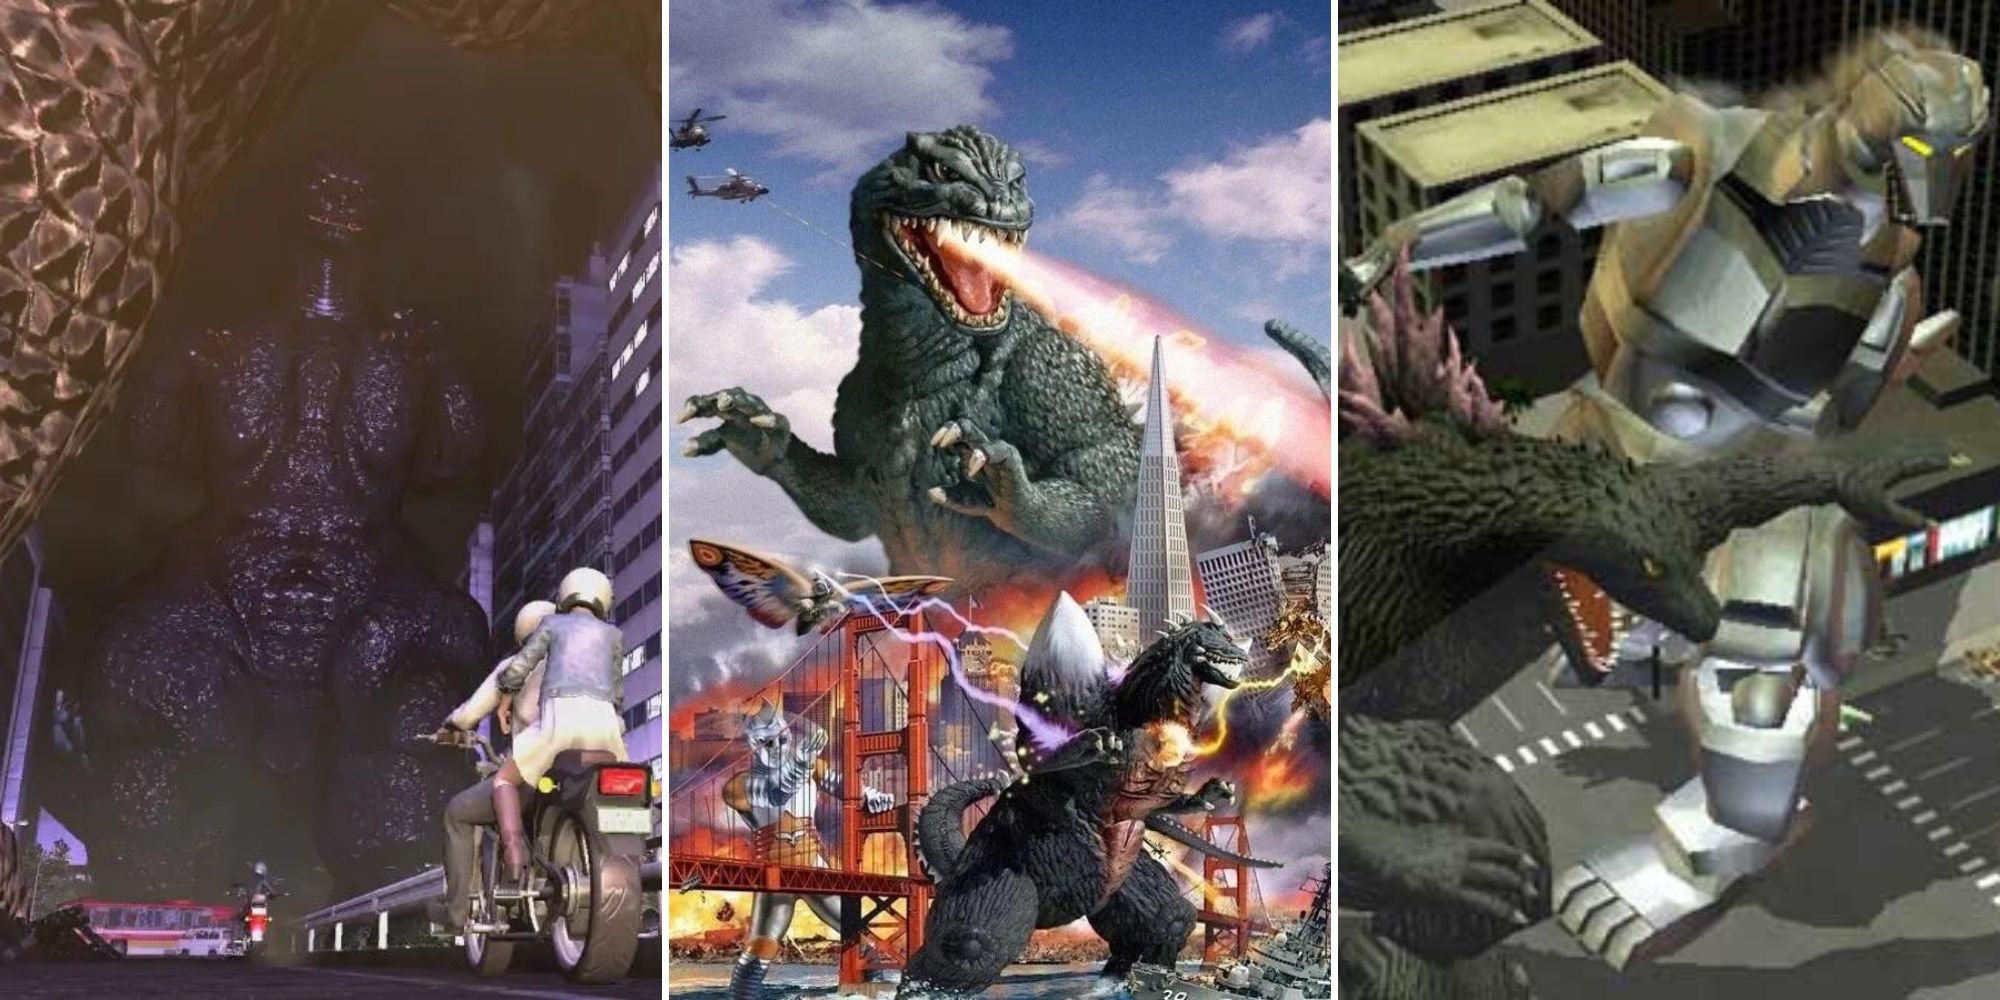 Split image of the Godzilla: Save the World cover art, a screenshot of Godzilla from City Shrouded in Shadow, and an image of Godzilla punching Mechagodzilla.